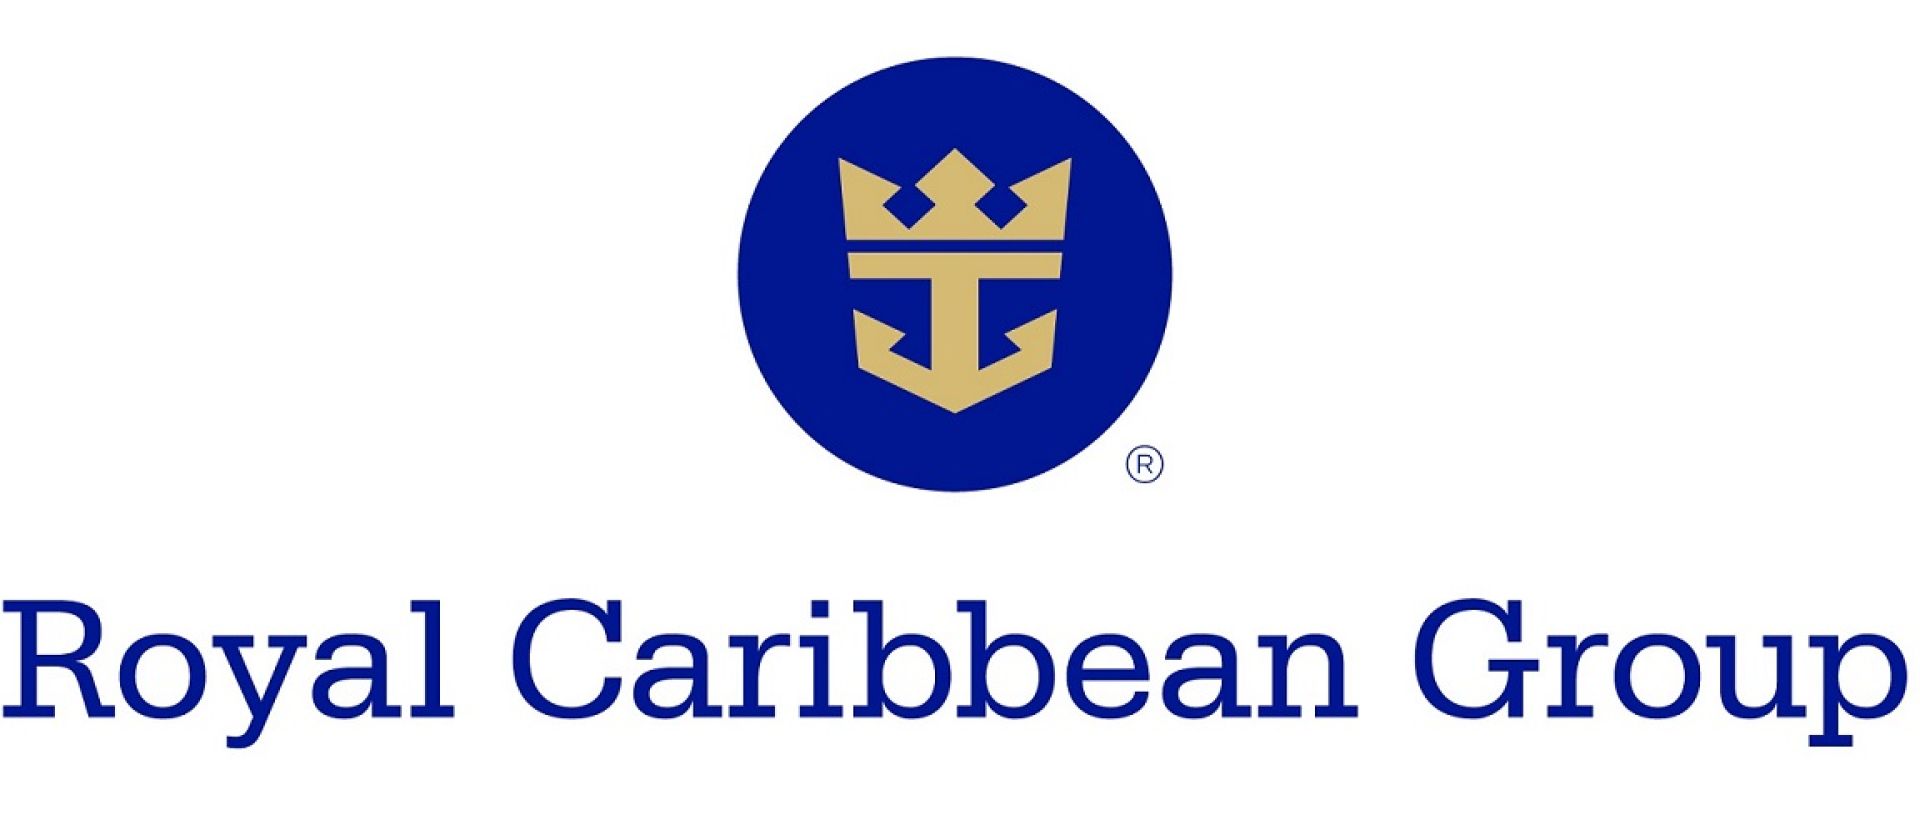 Royal Caribbean Group presenta identidad corporativa renovada | Expreso